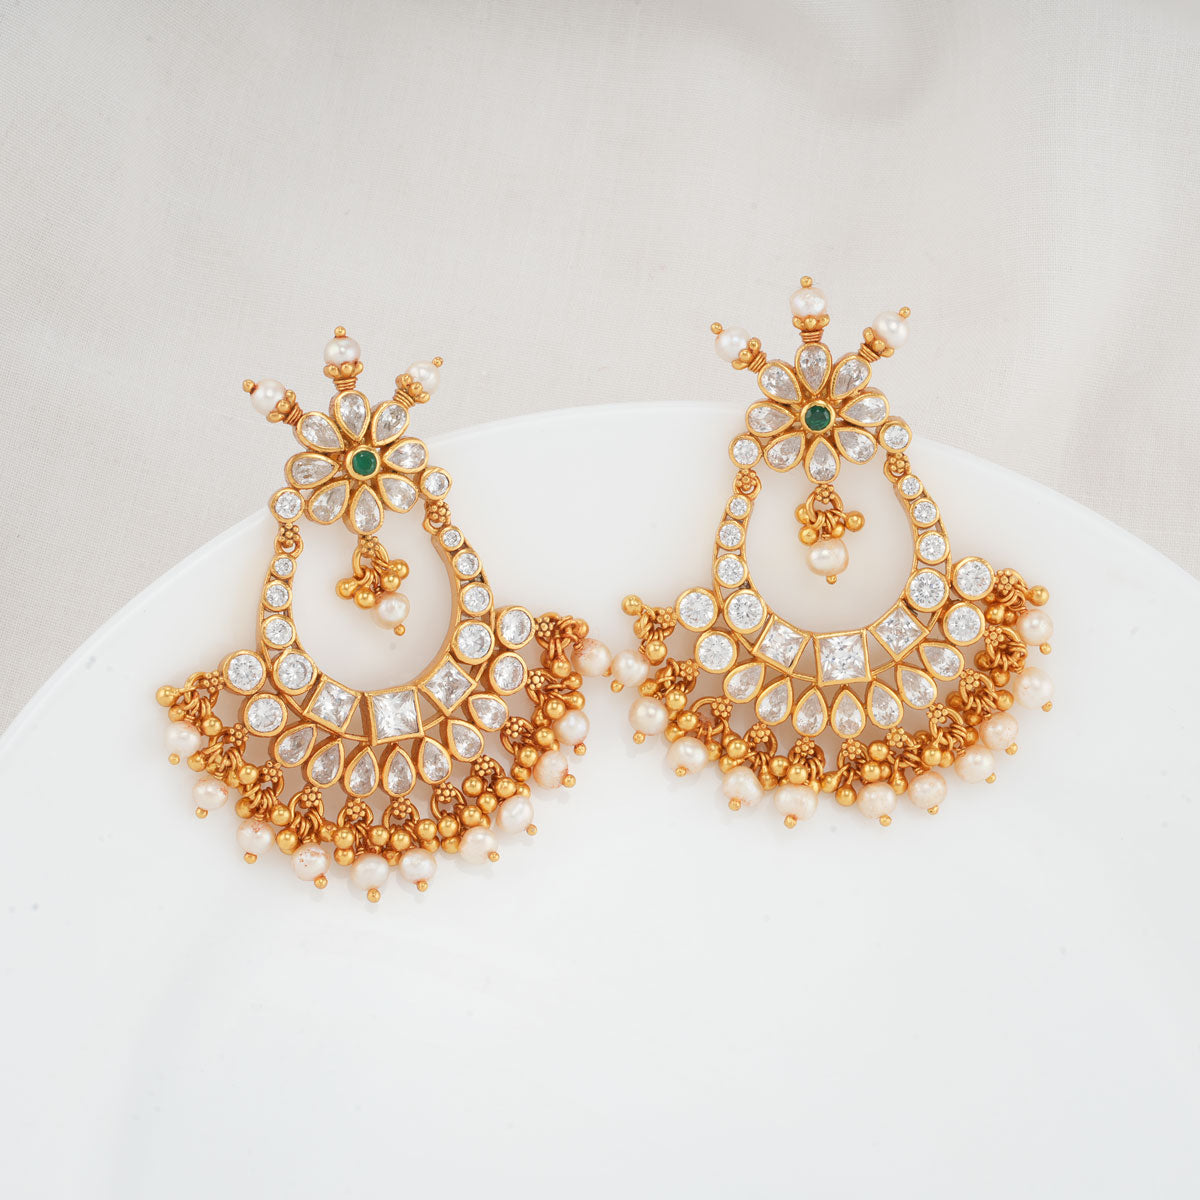 20k Gold Earrings Ear Stud Handmade Jewelry Traditional Design - Etsy |  Women's jewelry and accessories, Gold earrings, Gold jewelry simple